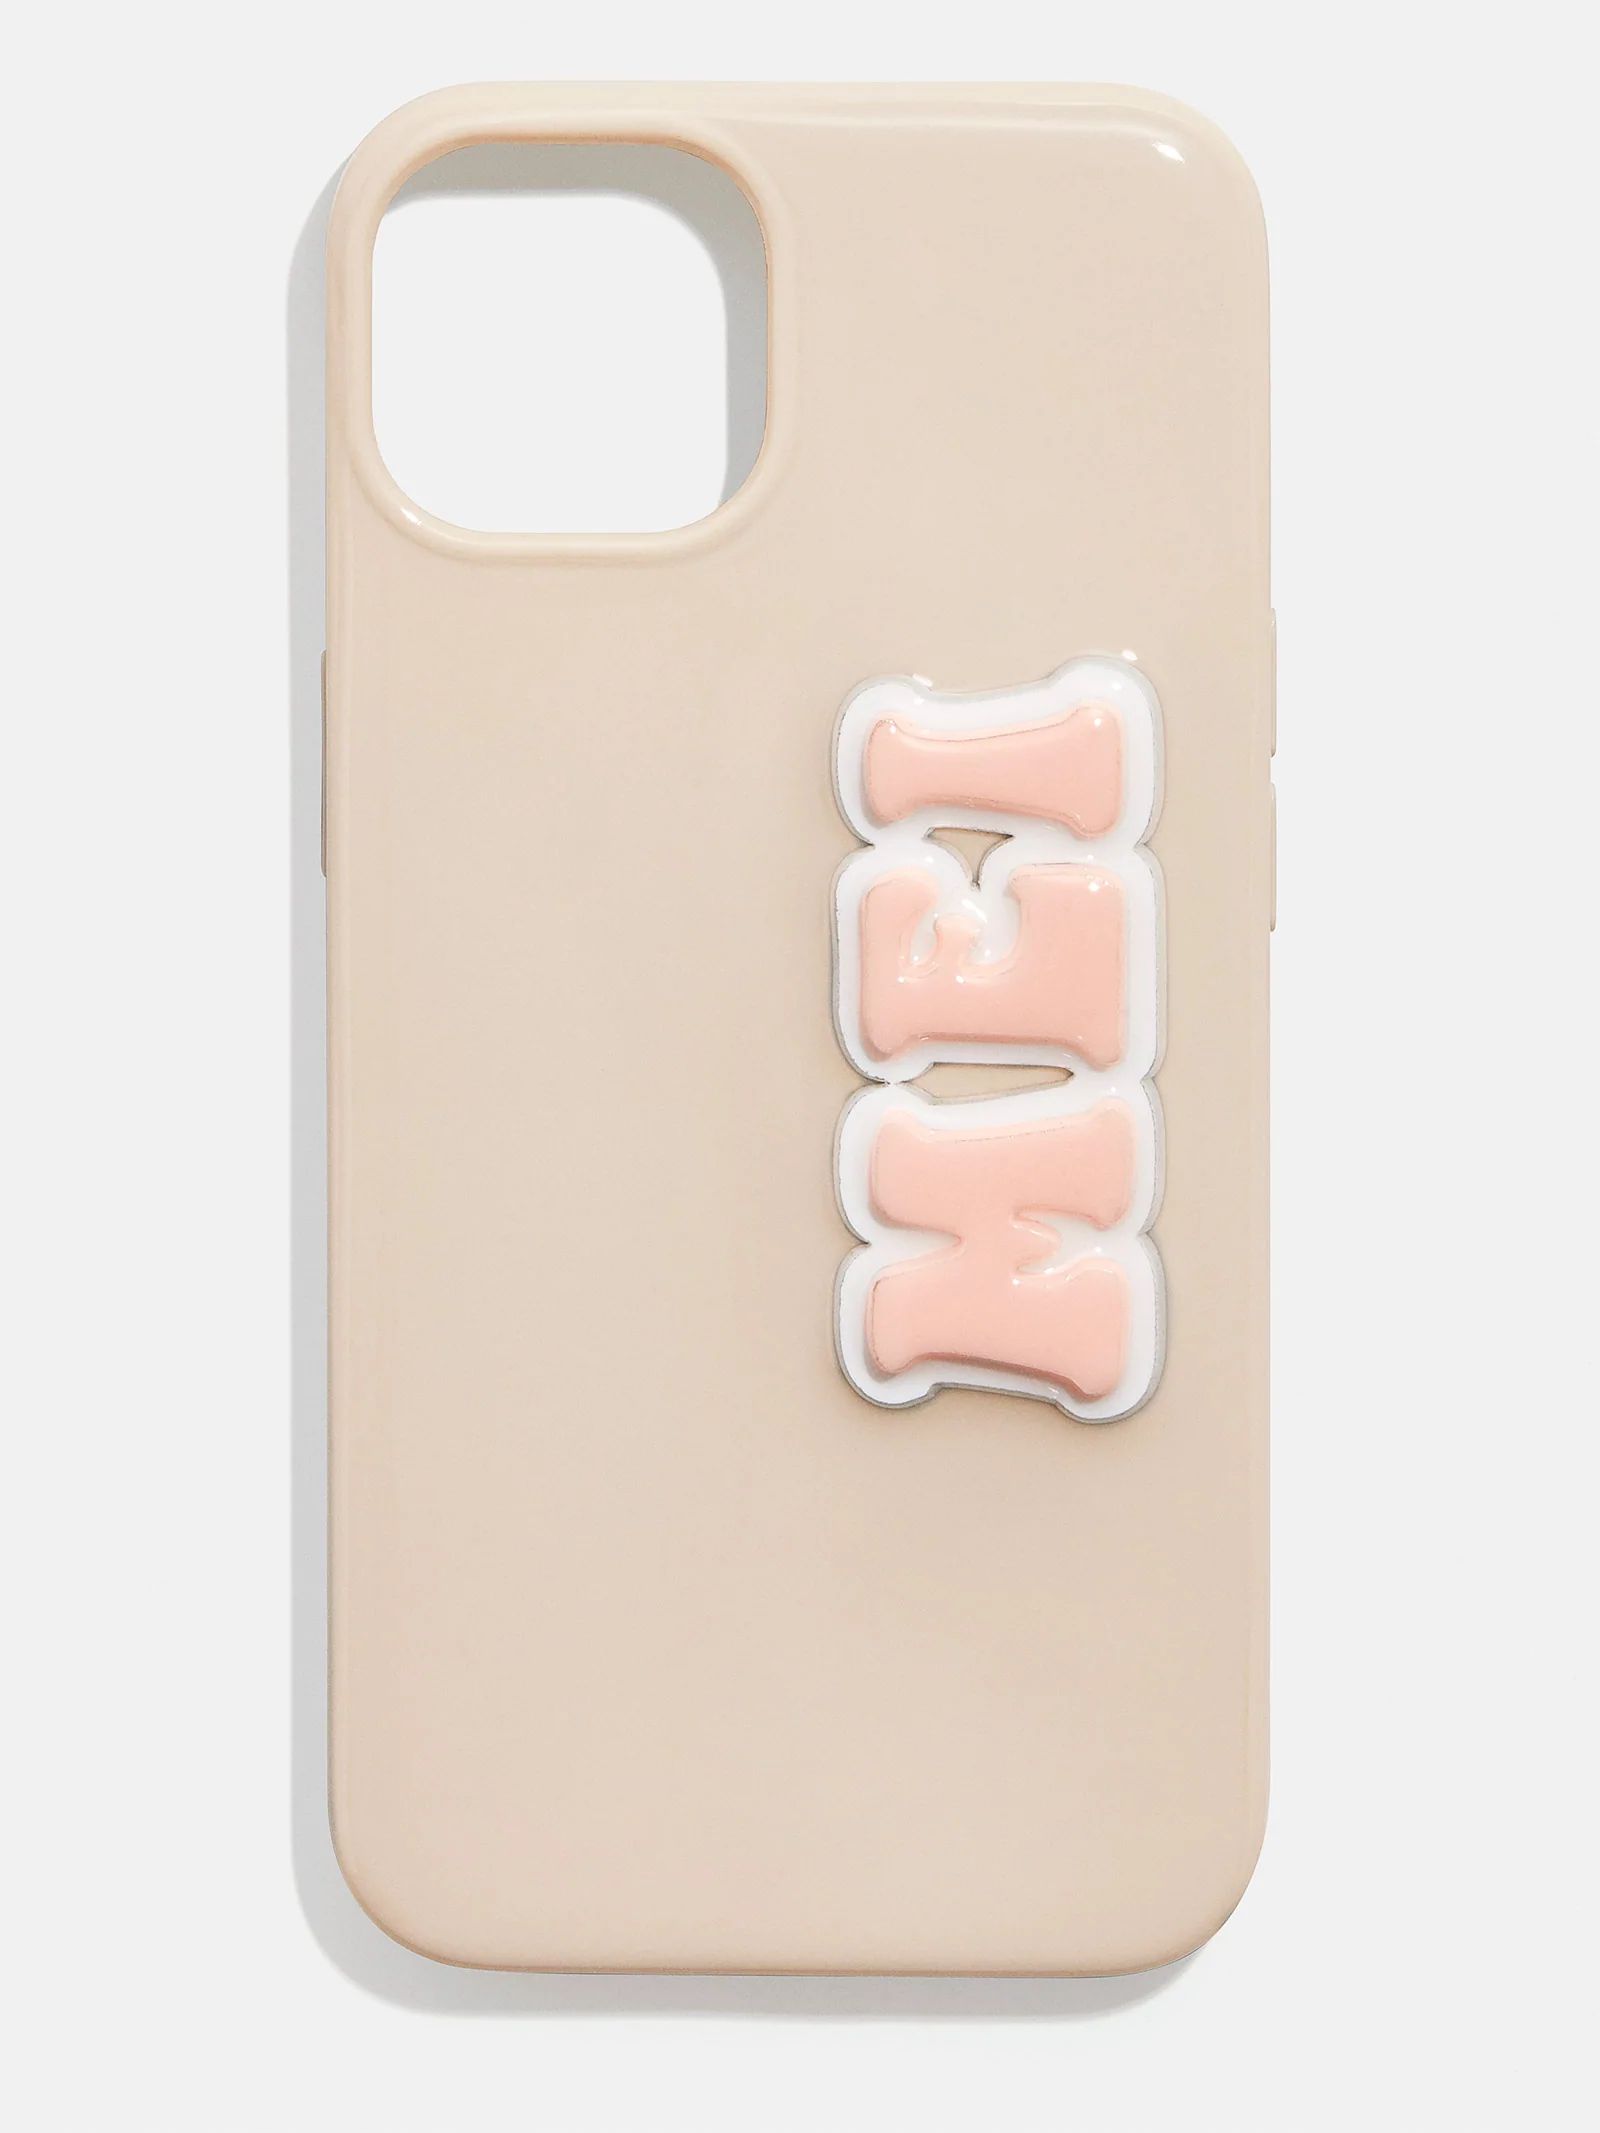 Copacetic iPhone Case - Tan/Pink | BaubleBar (US)